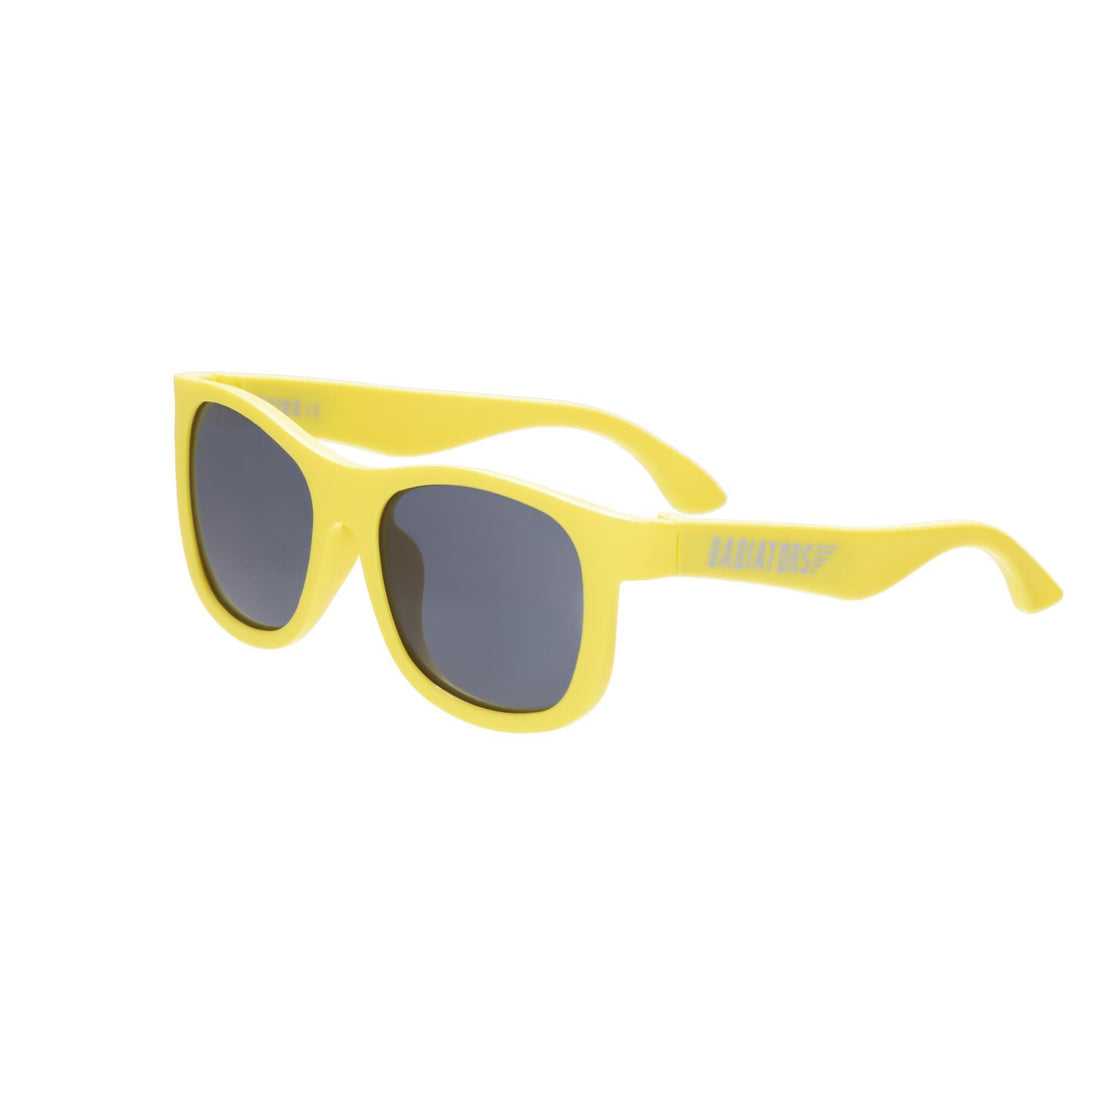 Navigator Sunglasses-Sunglasses-Babiators-Ages 0-2-Black-bluebird baby & kids